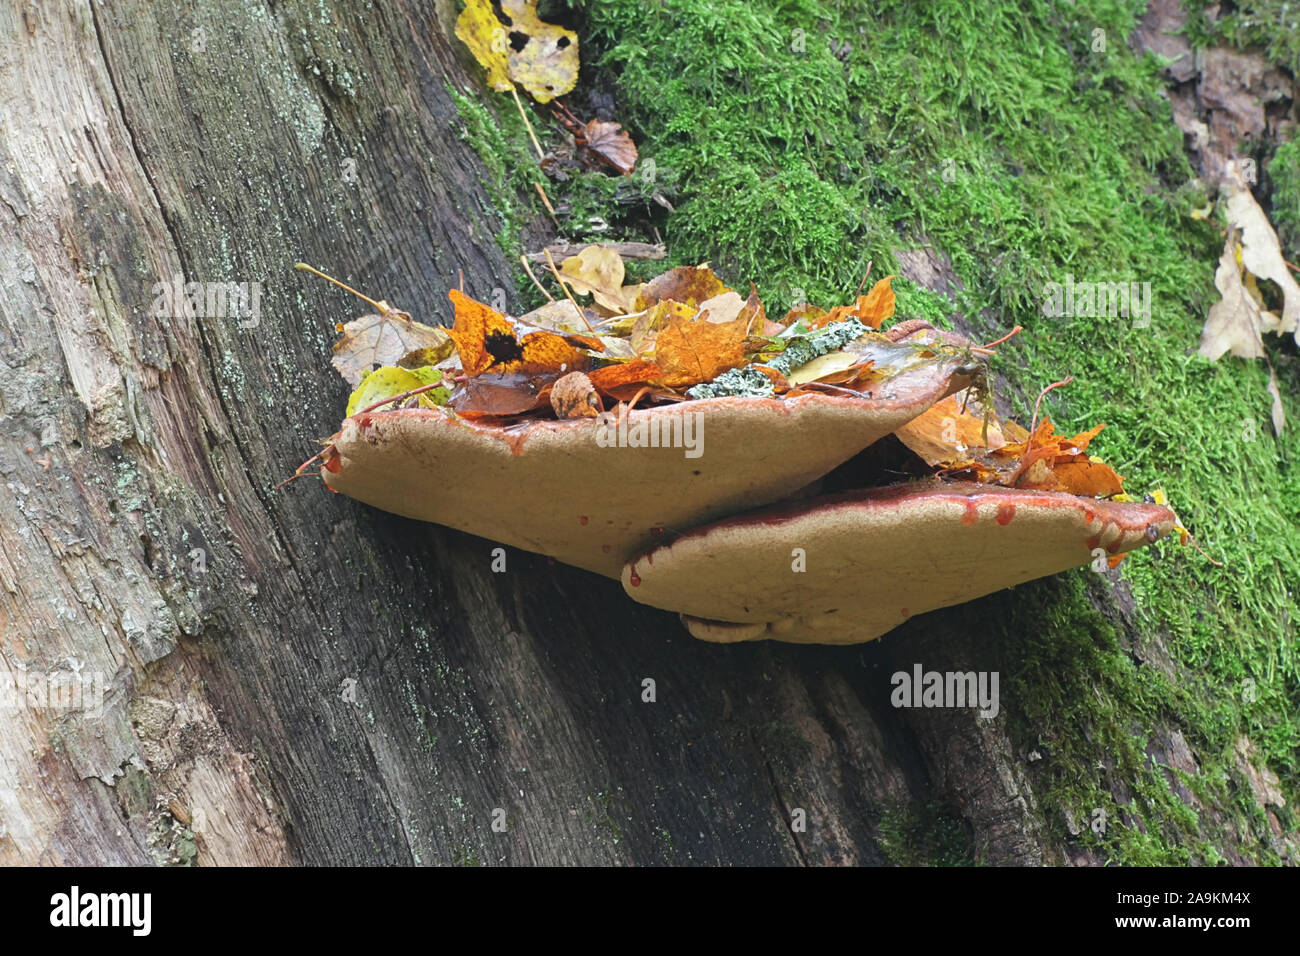 Fistulina hepatica, known as beefsteak fungus, beefsteak polypore, ox tongue, or tongue mushroom, growing on oak in Finland Stock Photo